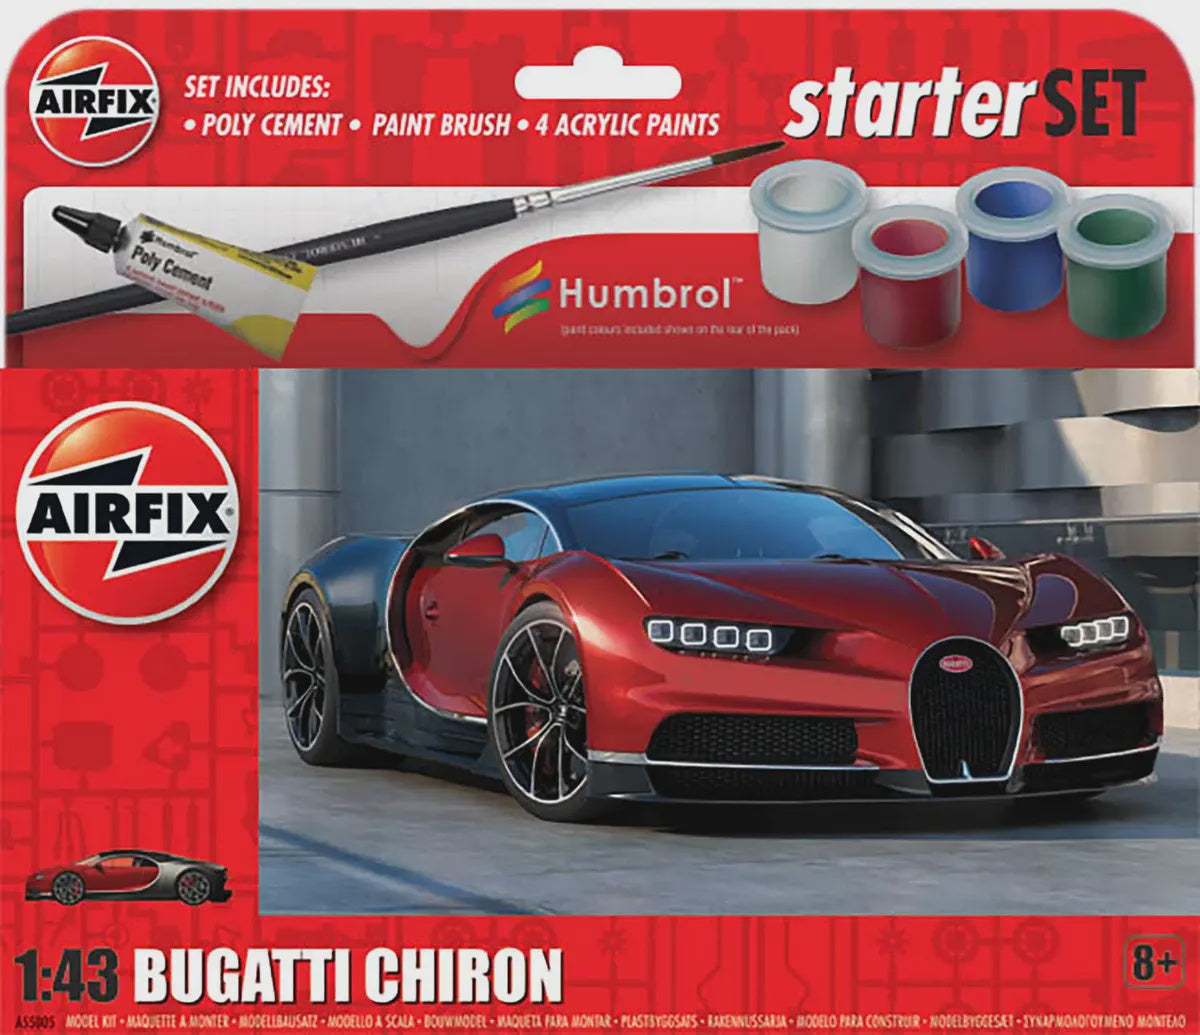 Airfix Bugatti Chiron Starter Set 1:43